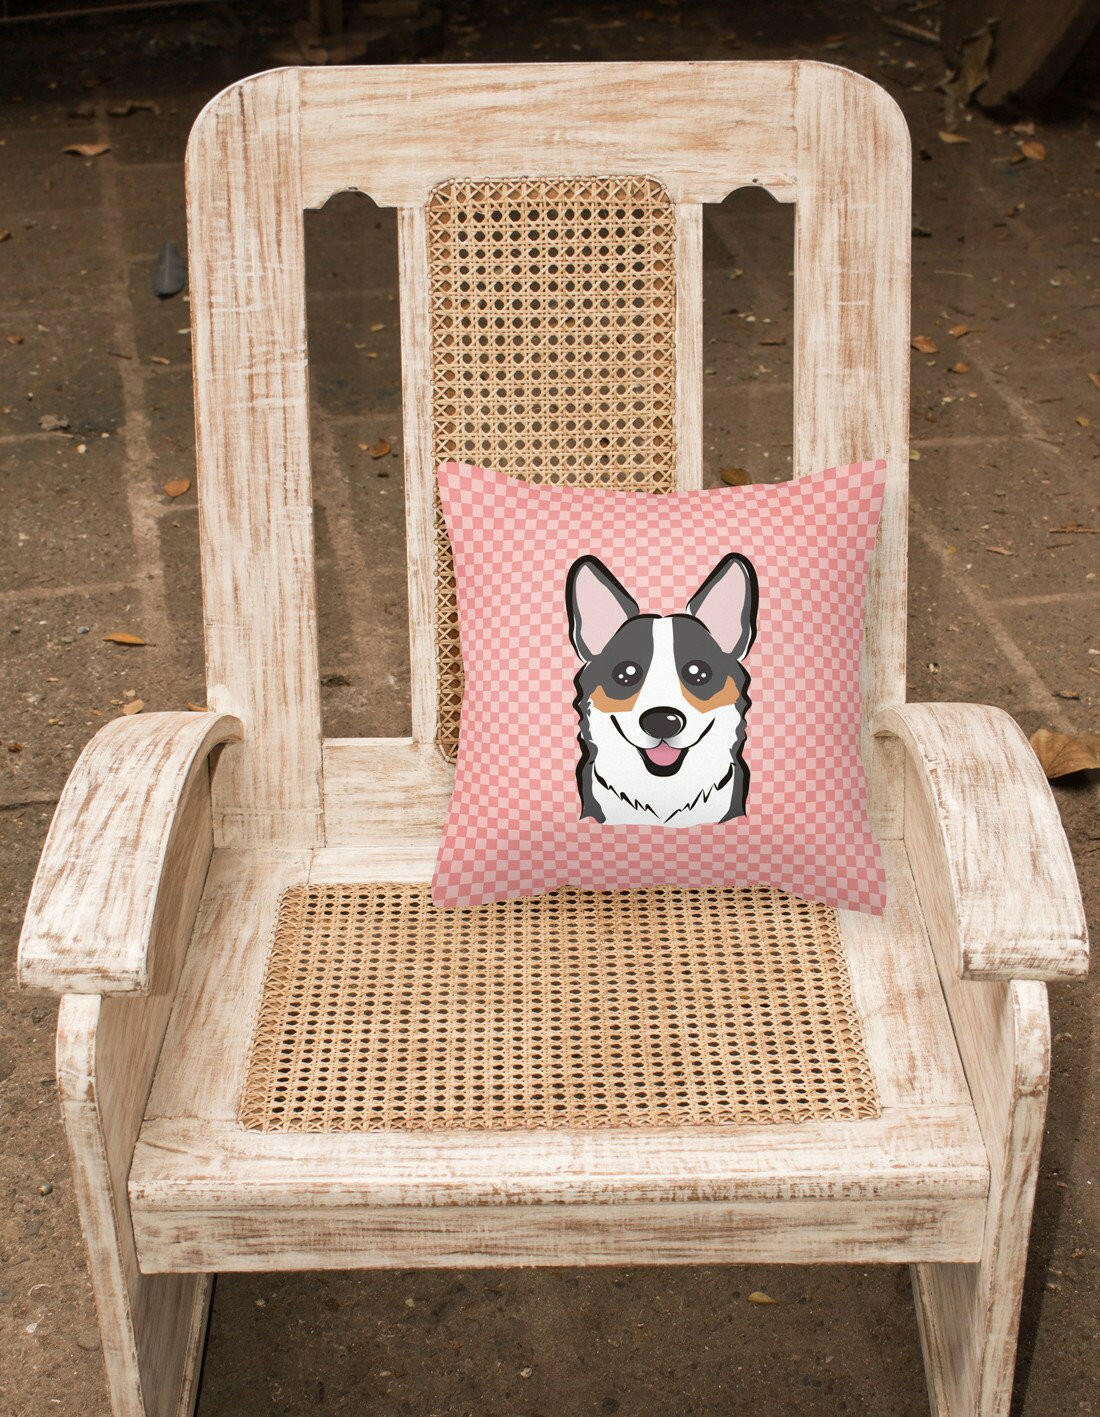 Checkerboard Pink Corgi Canvas Fabric Decorative Pillow BB1255PW1414 - the-store.com